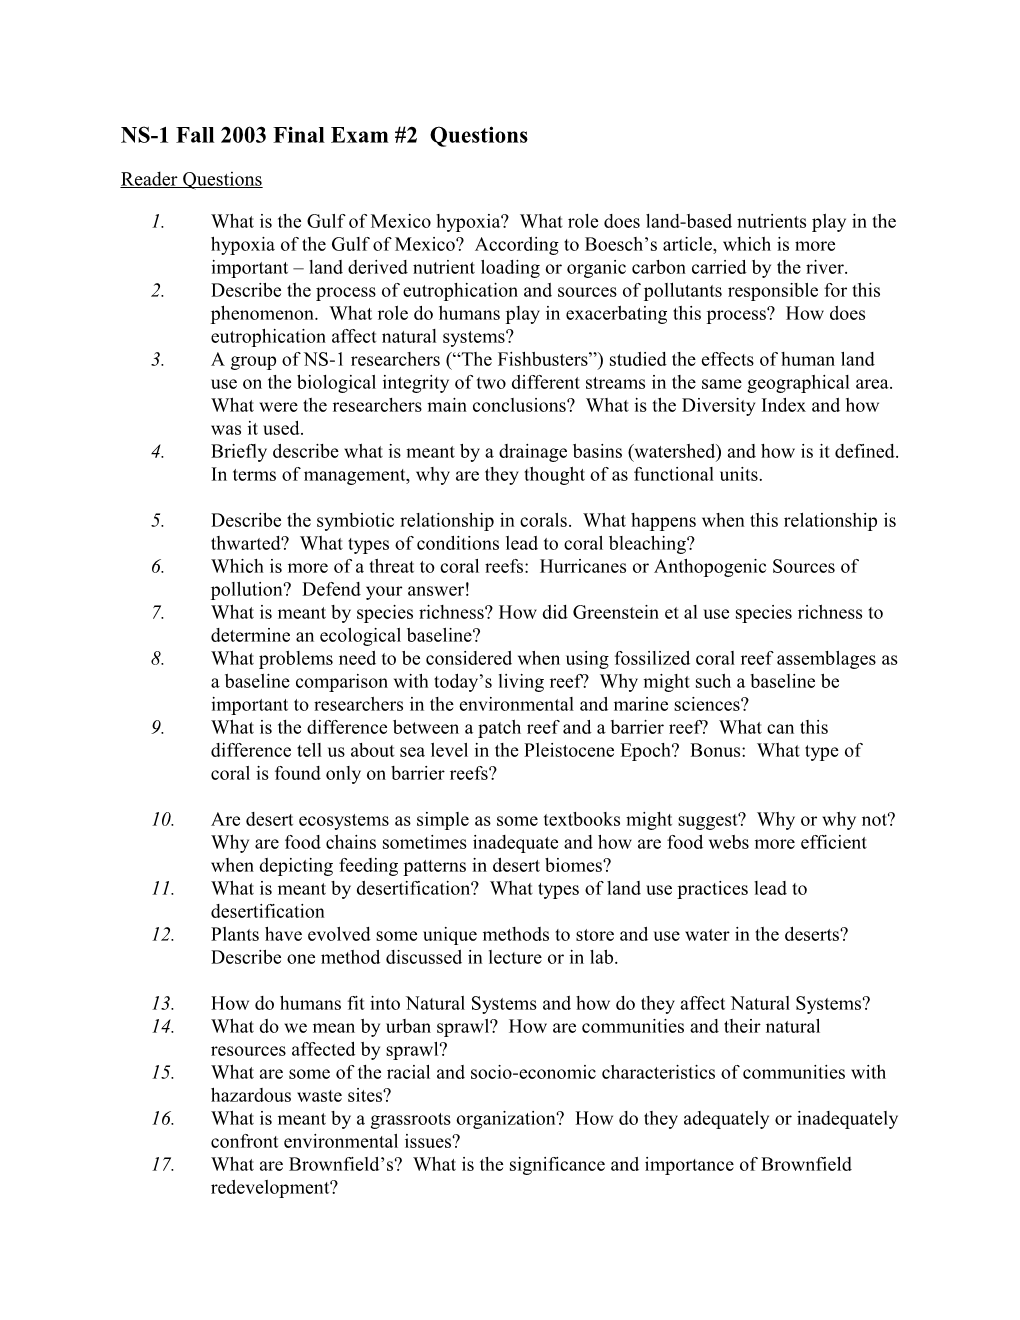 NS-1 Fall 2003 Final Exam Questions